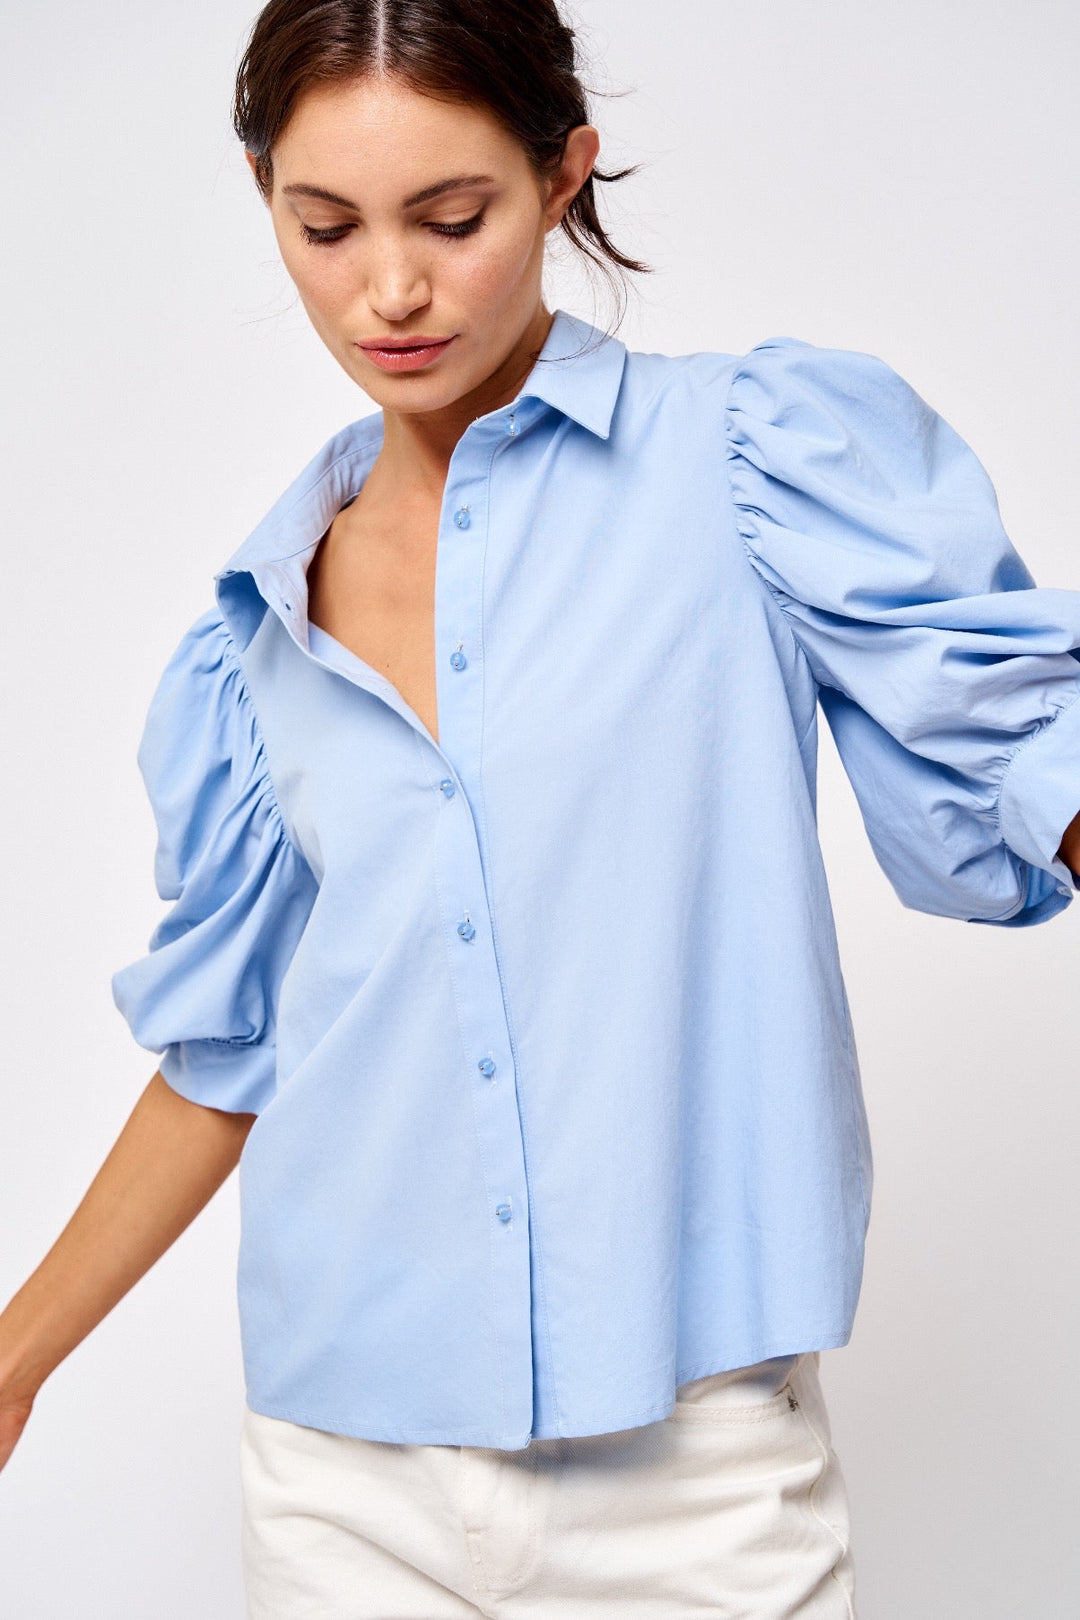 Afina Exaggerated Puff Sleeve Button Down - Lush Lemon - Women's Clothing - Ciebon - 13057